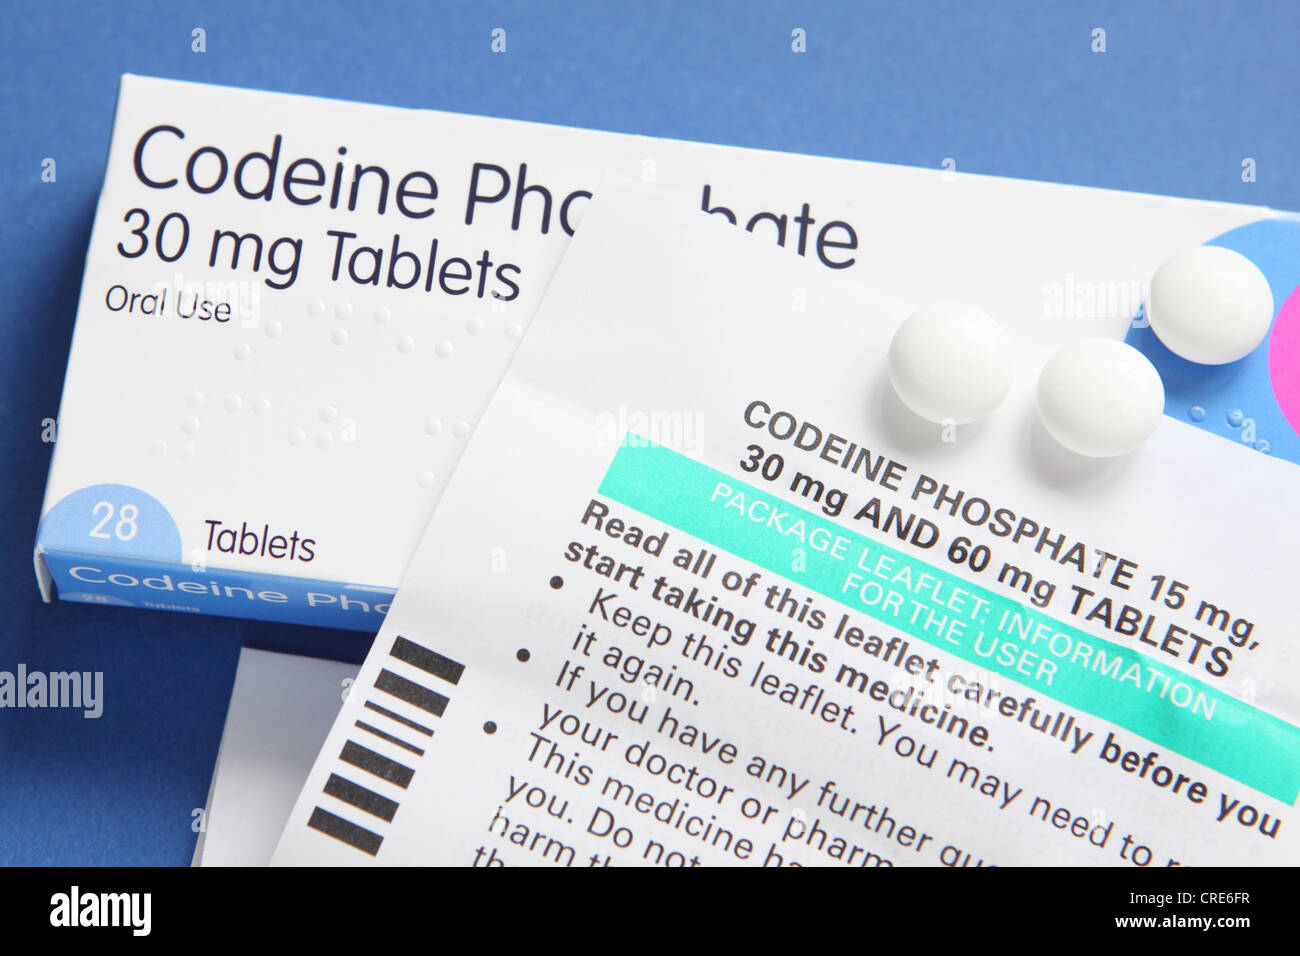 where to buy codeine phosphate tablets